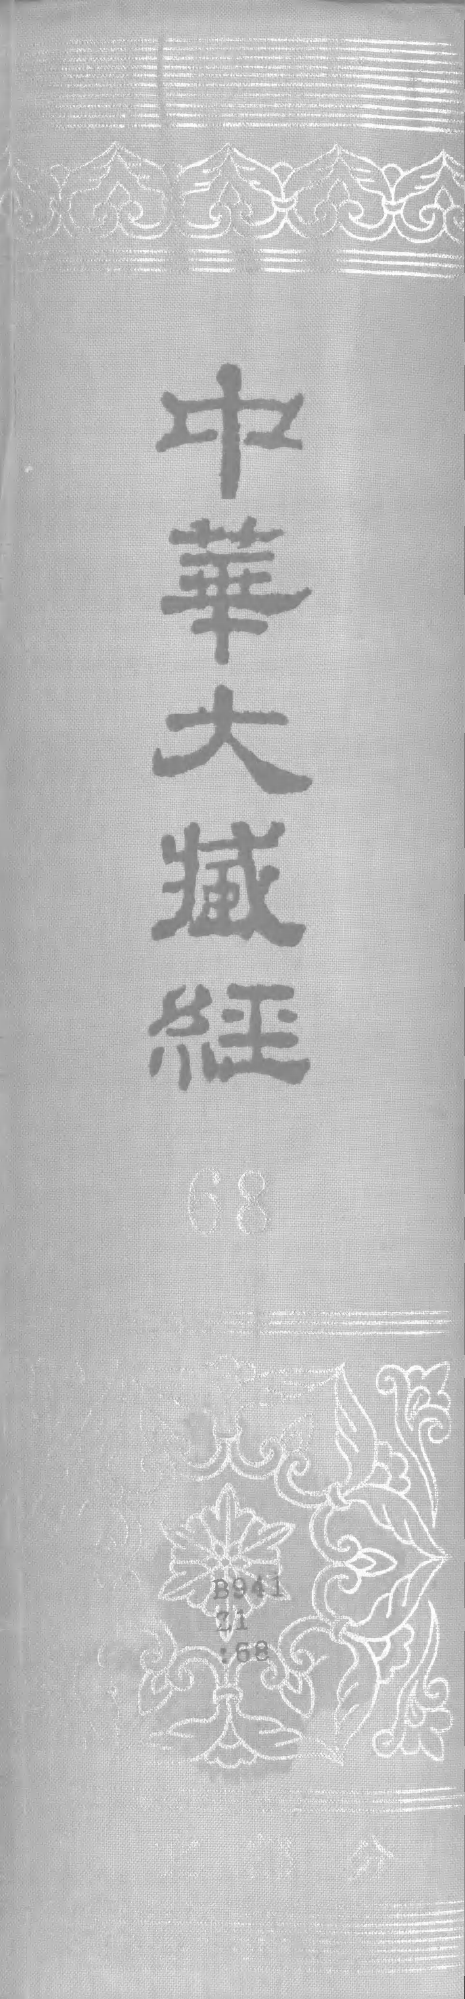 File:《中華大藏經》 第68冊 封面.png